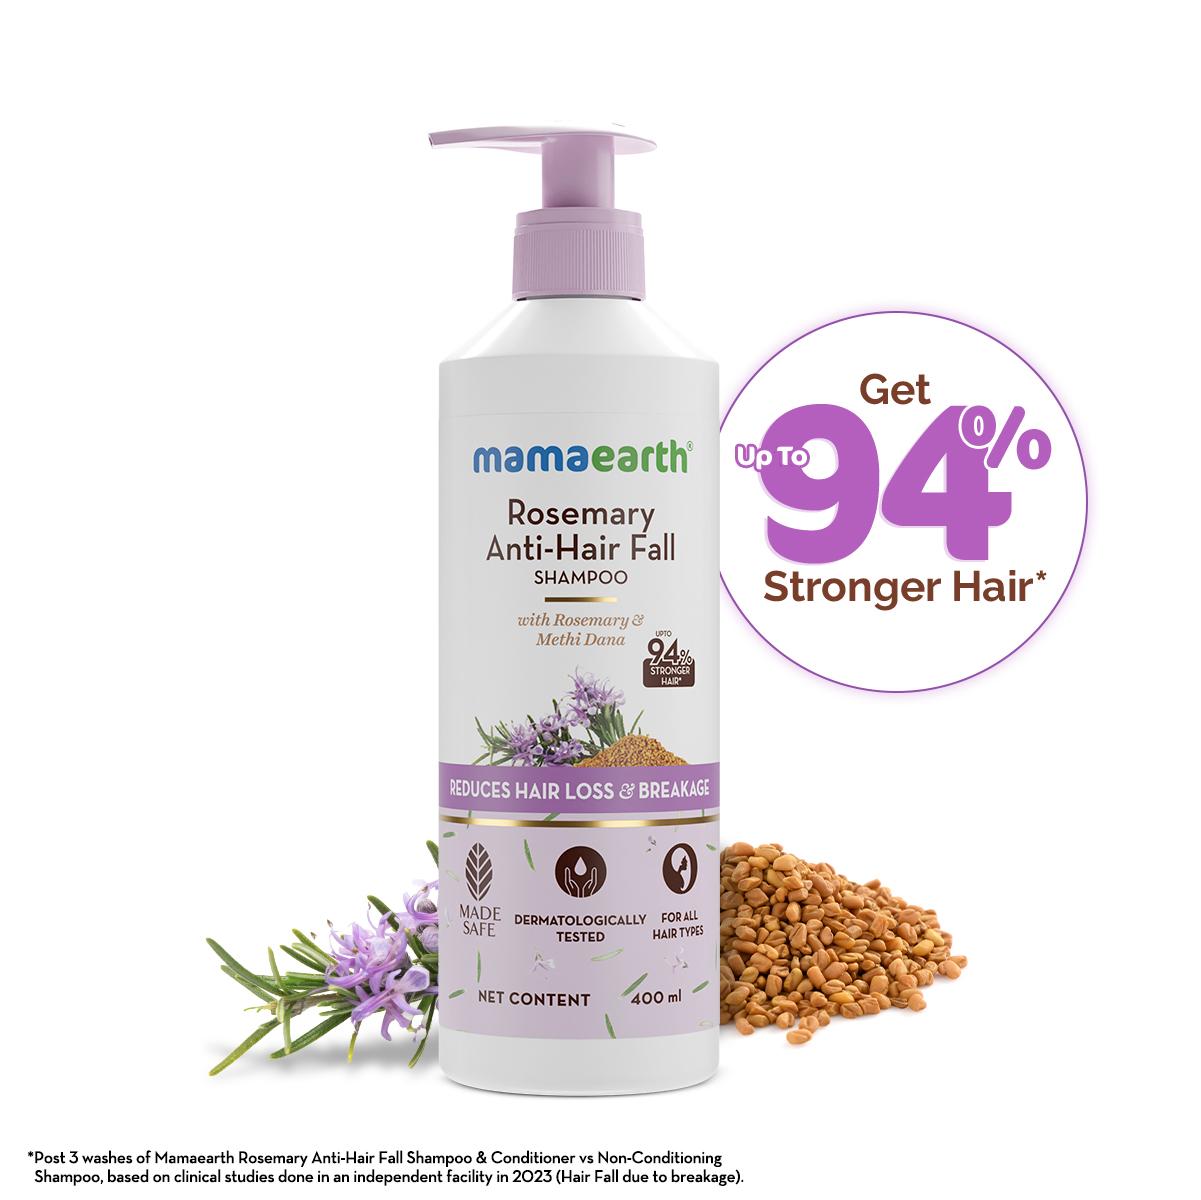 rosemary anti-hair fall shampoo with rosemary & methi dana for reducing hair loss & breakage - 400 ml